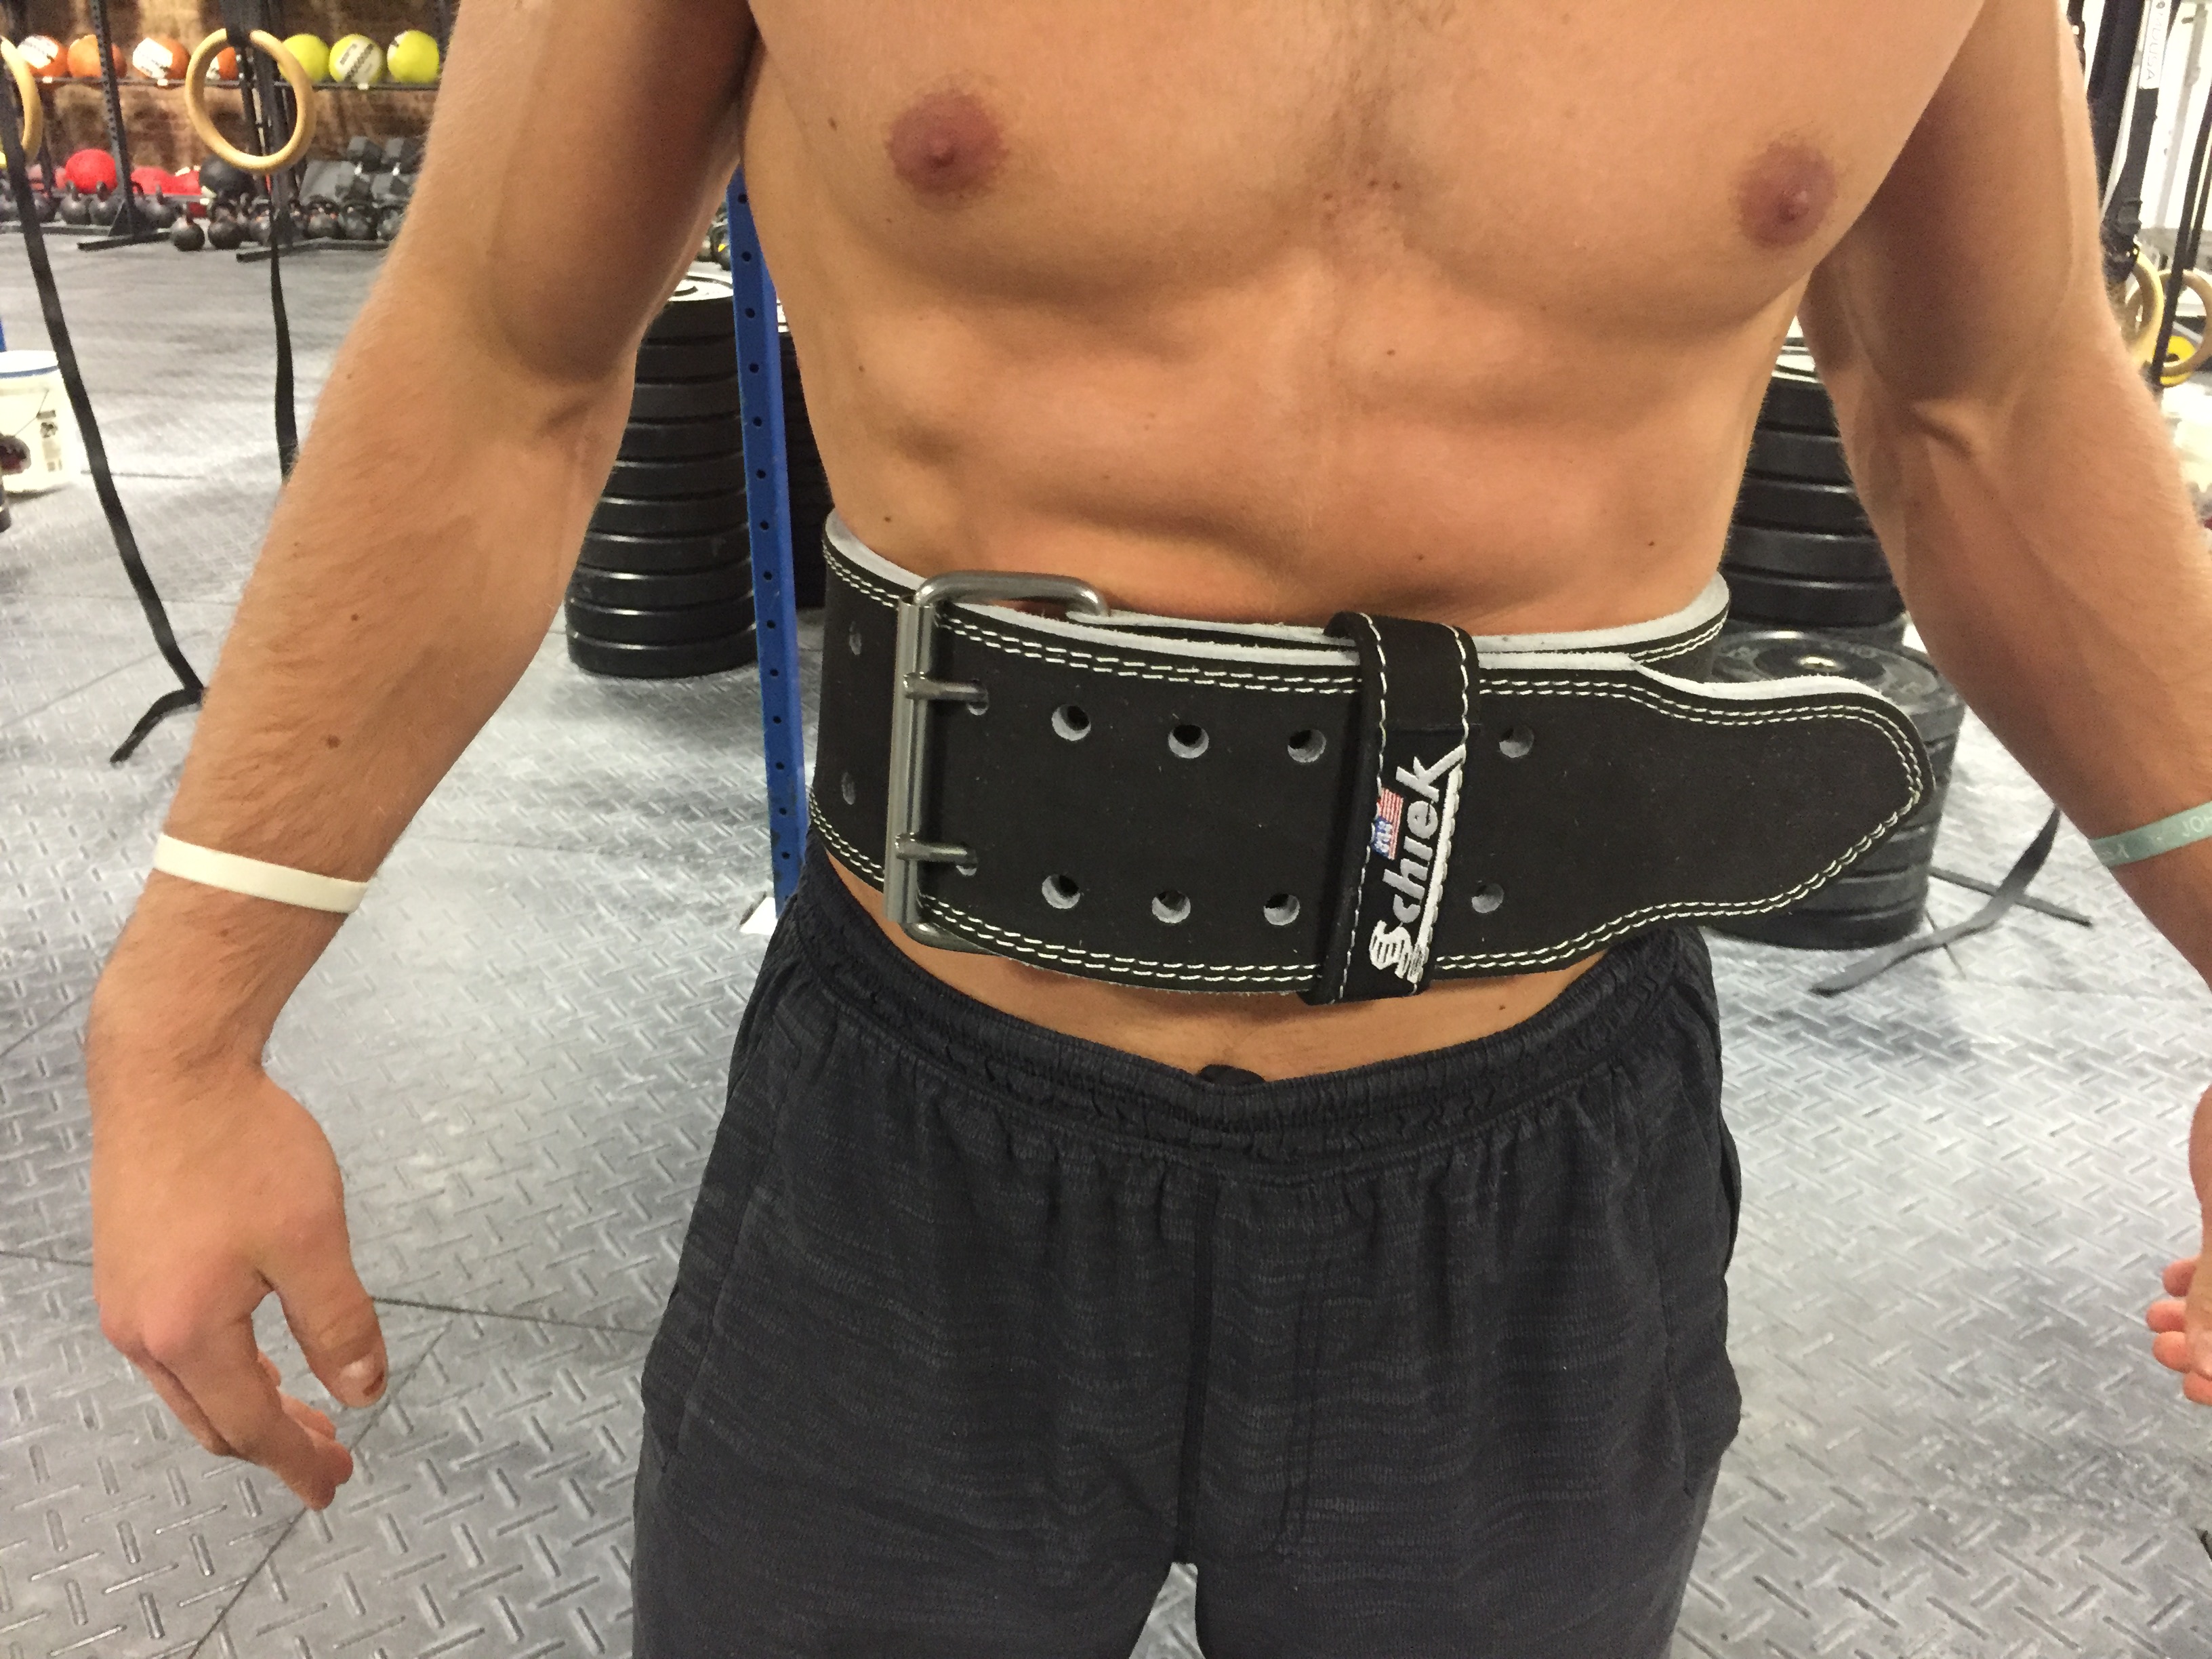 Anunturi power belt - power belt